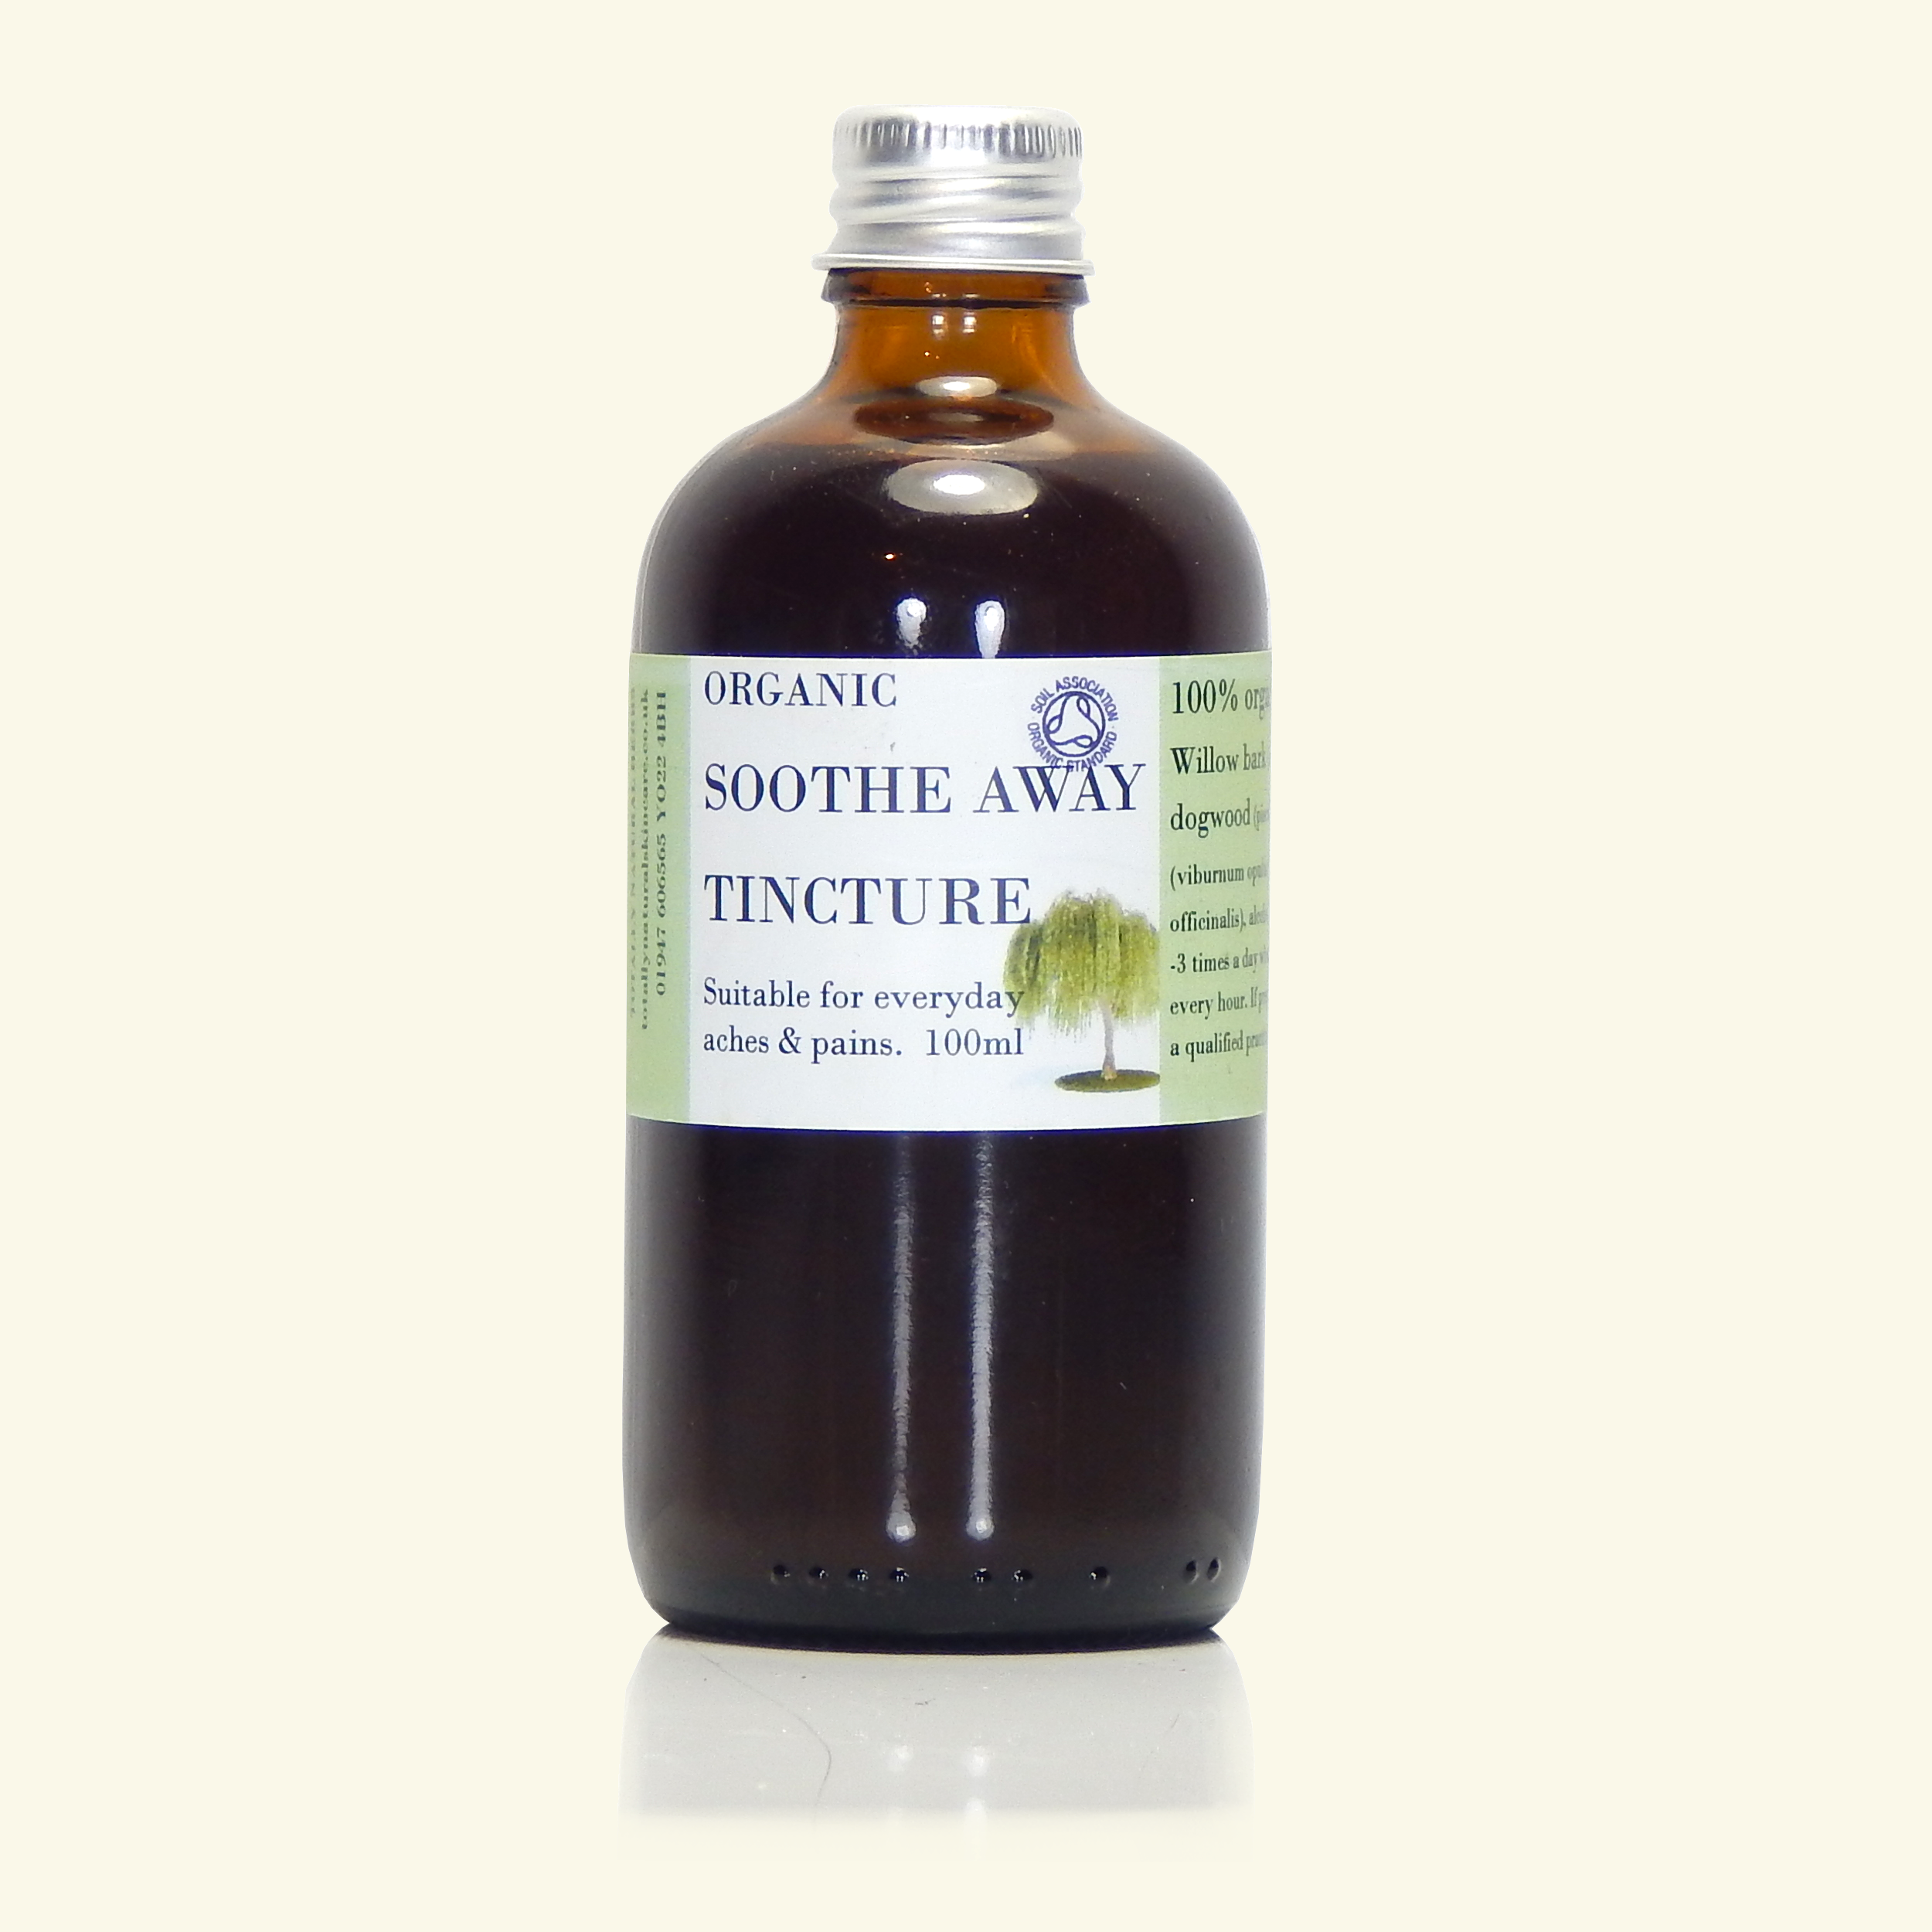 Soothe Away Tincture (organic)